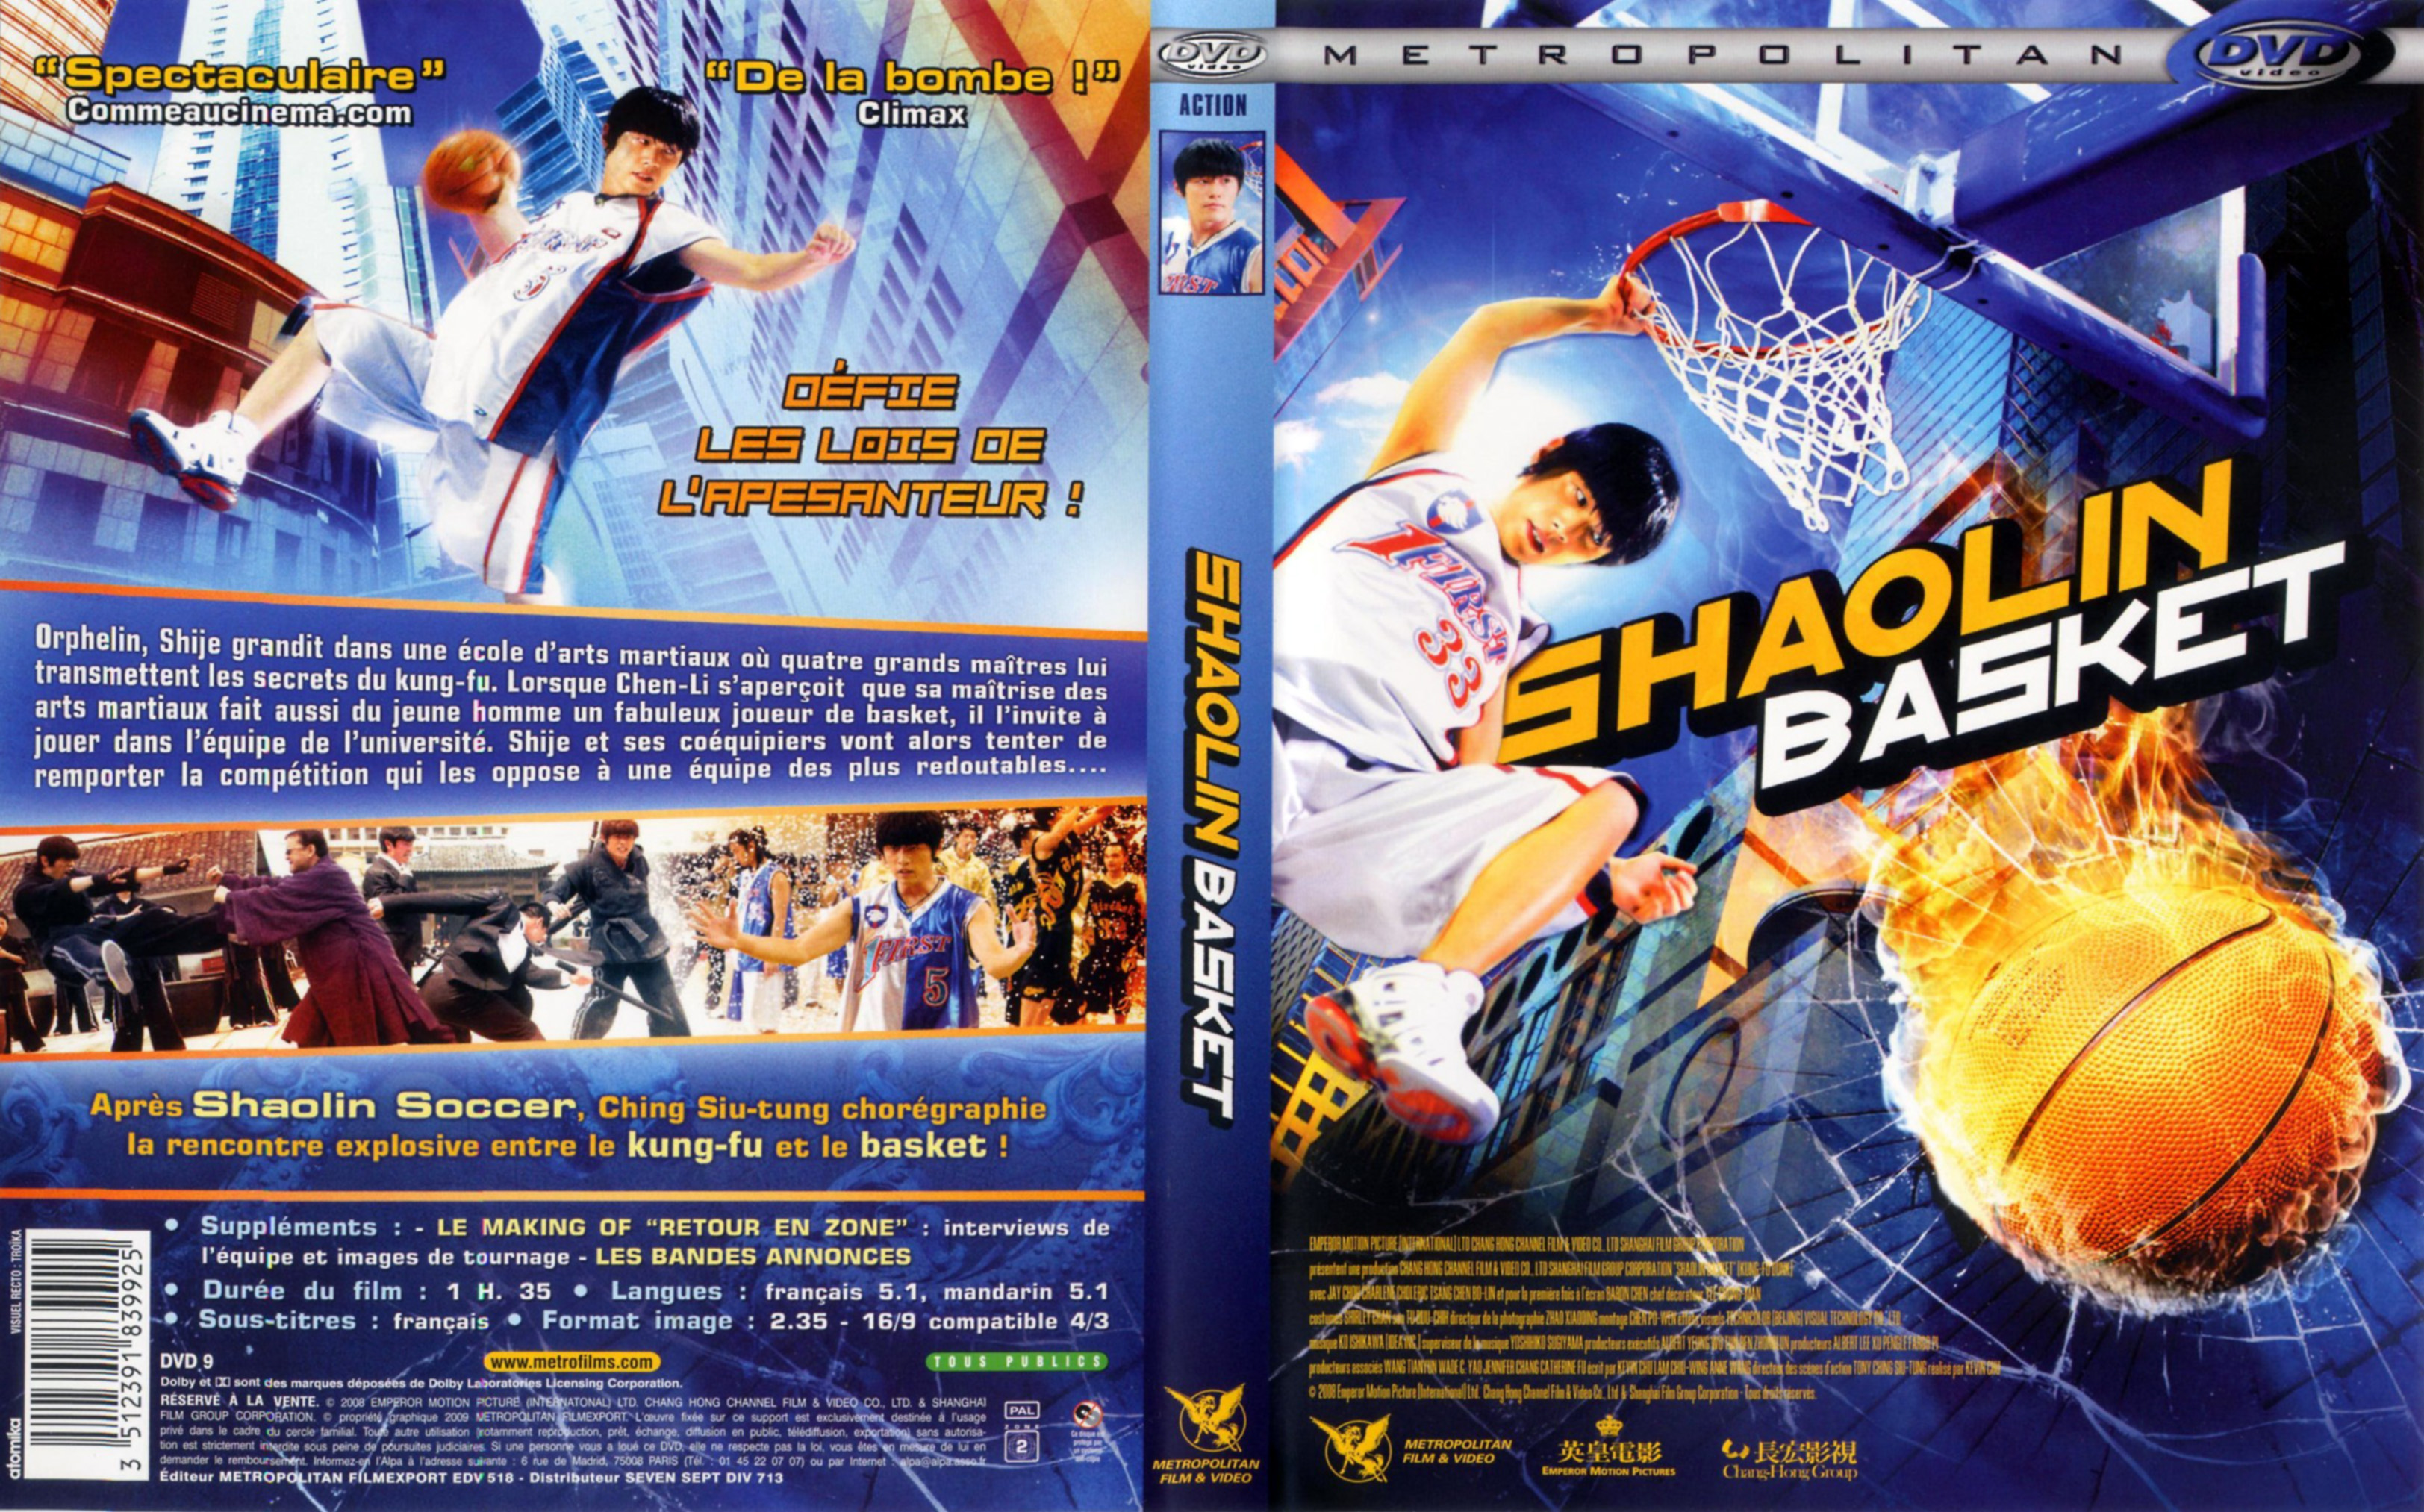 Jaquette DVD Shaolin basket